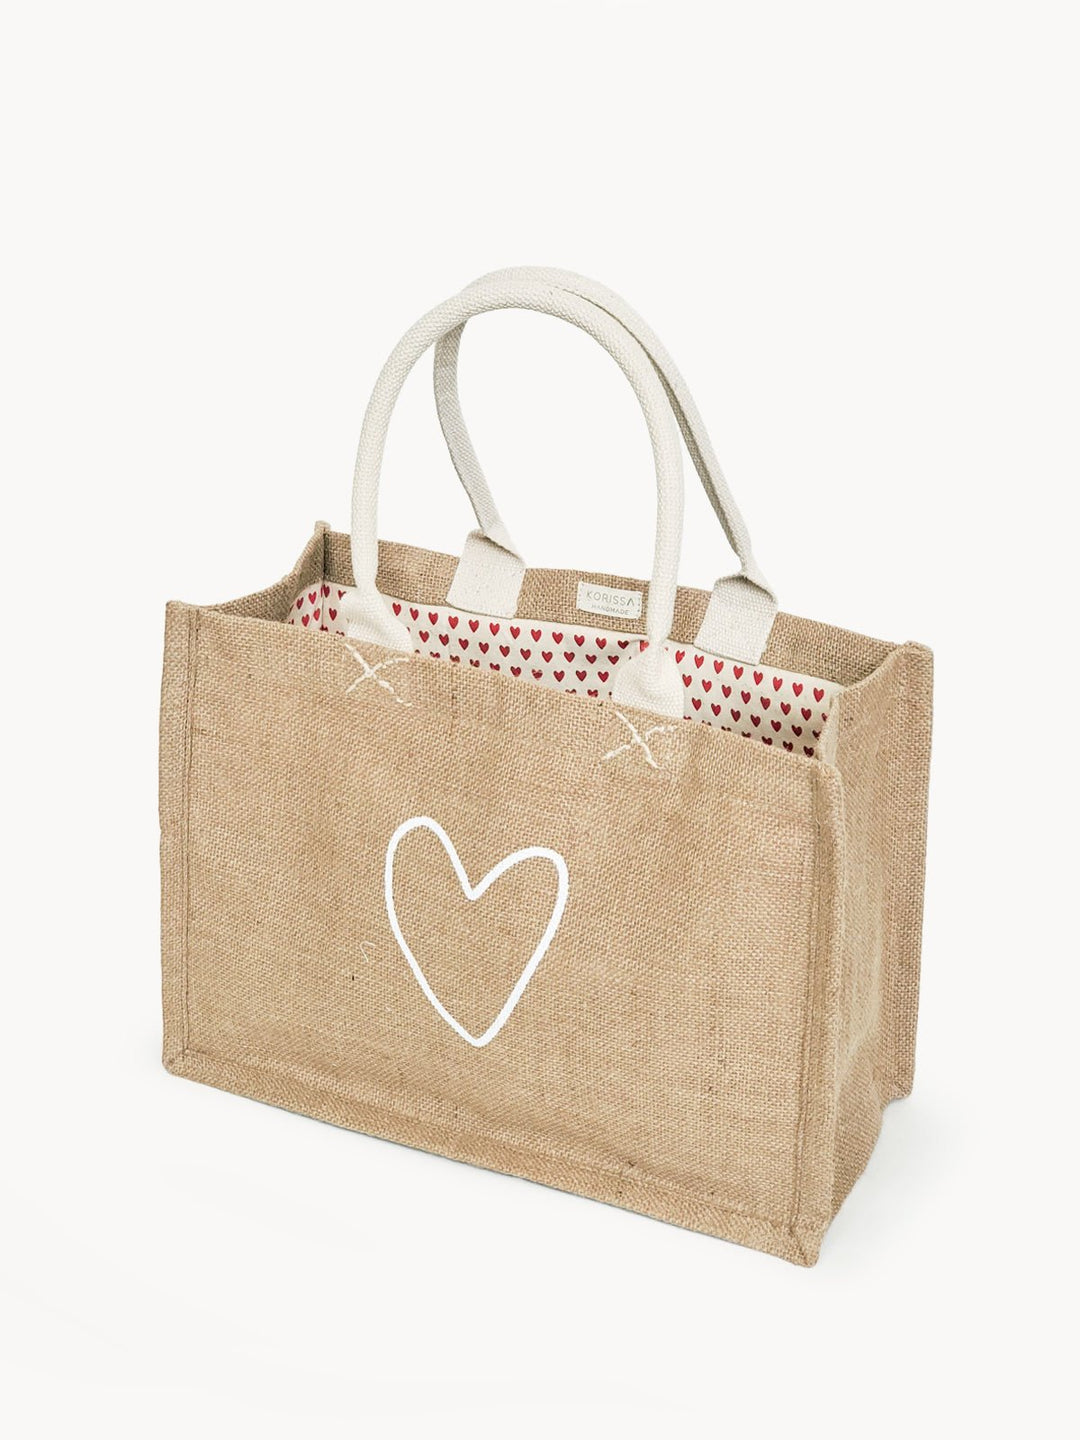 Jute Canvas Shopping Bag - Love - EcofiedHome